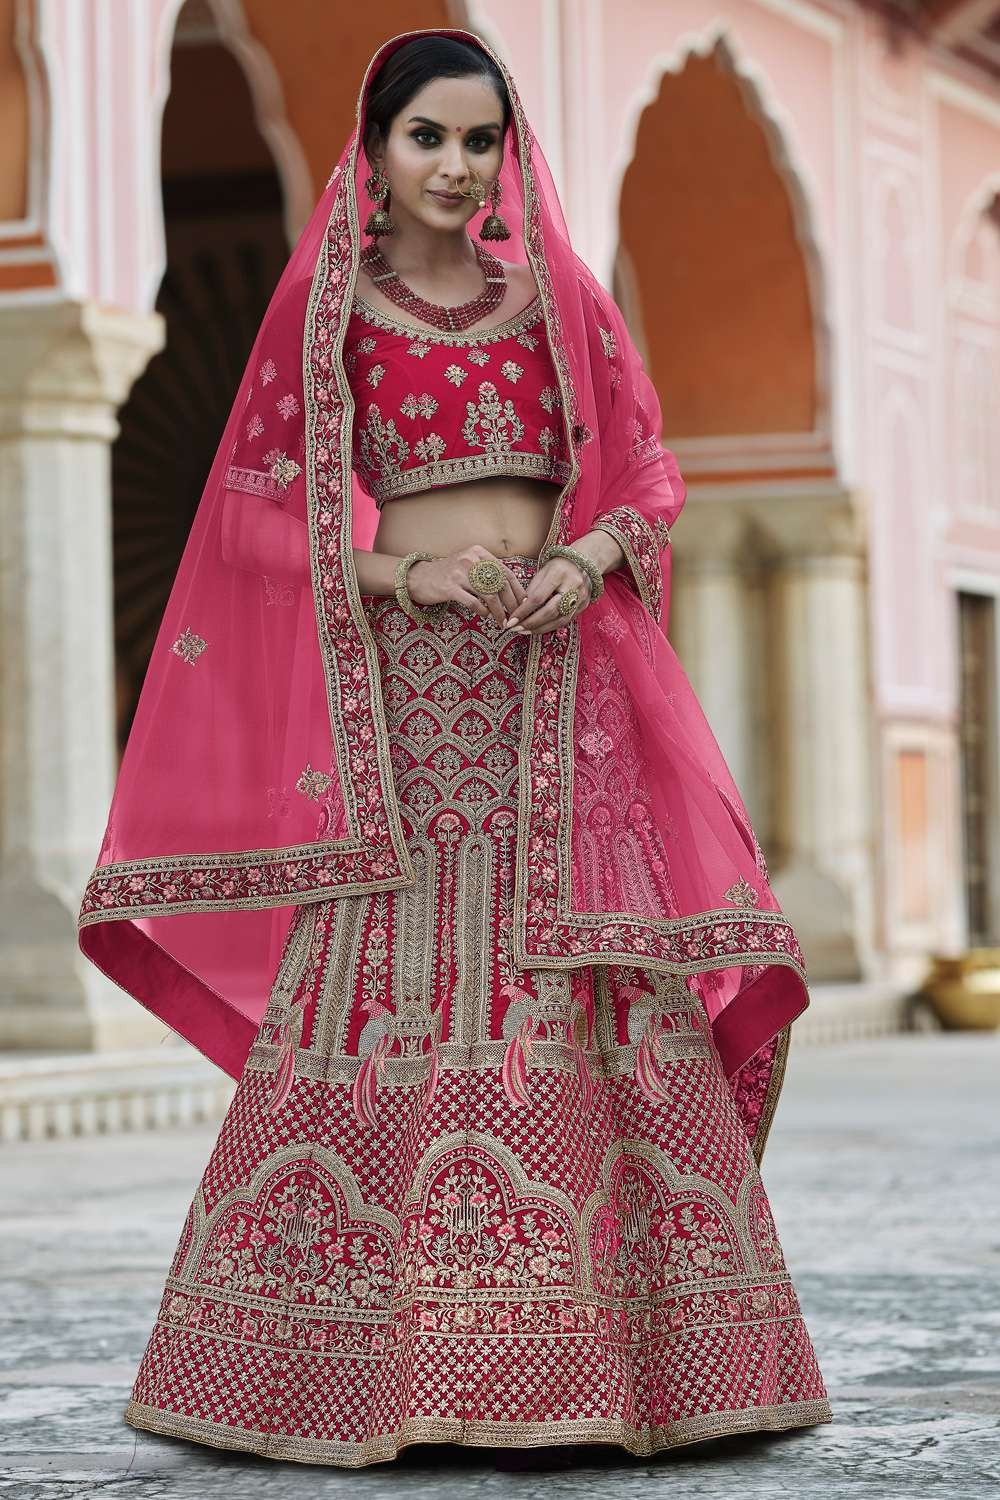 30 Muslim Wedding Dresses | GetEthnic by GetEthnic - Issuu